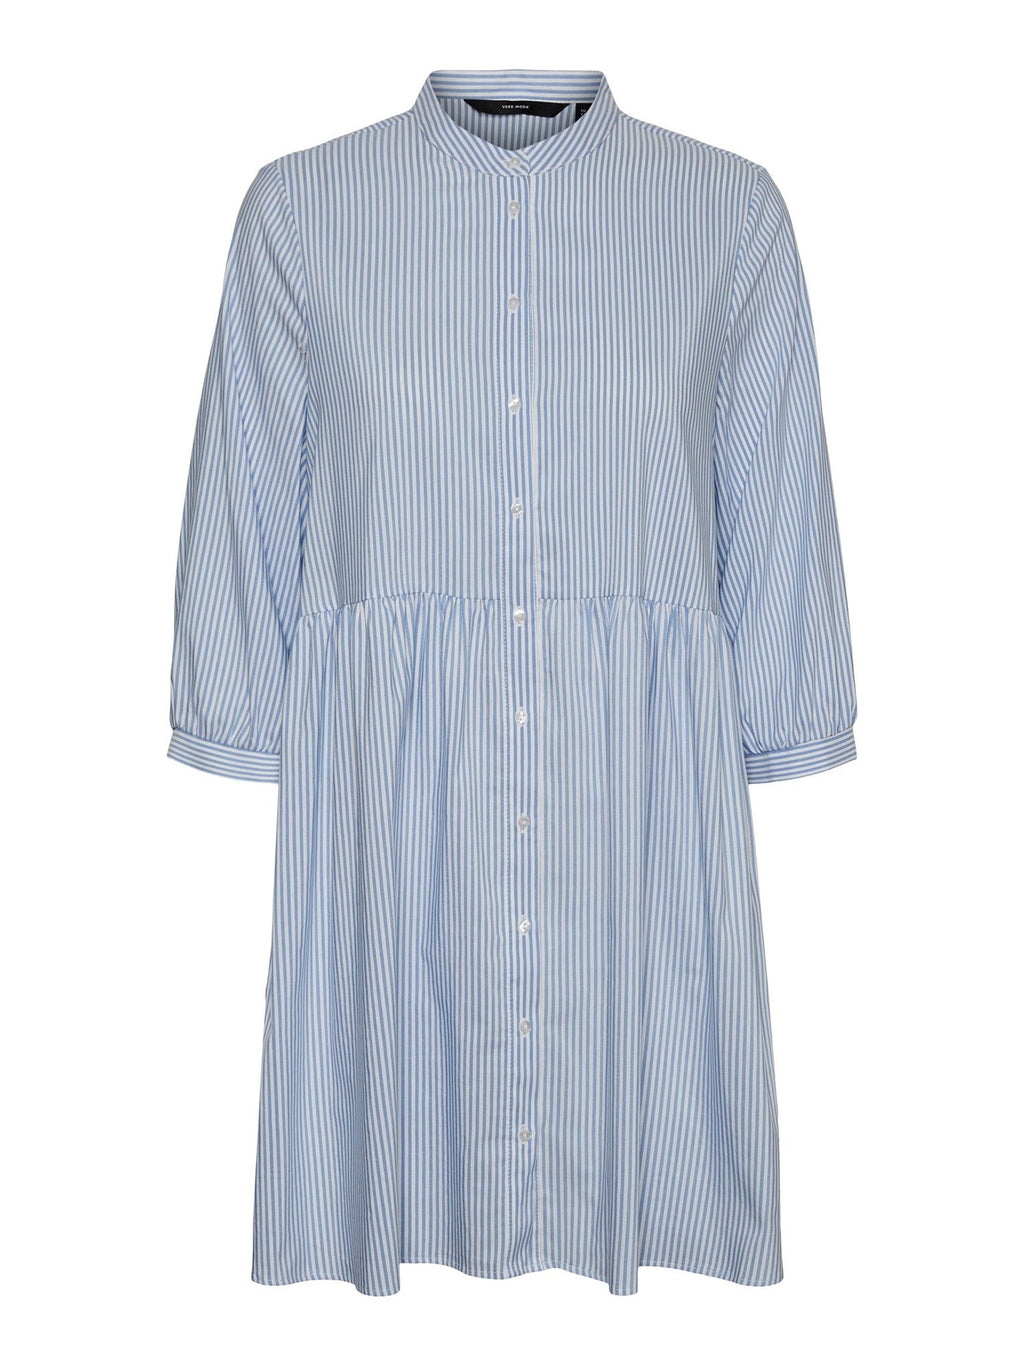 Sisi 3/4 Dress - Blue / White Striped